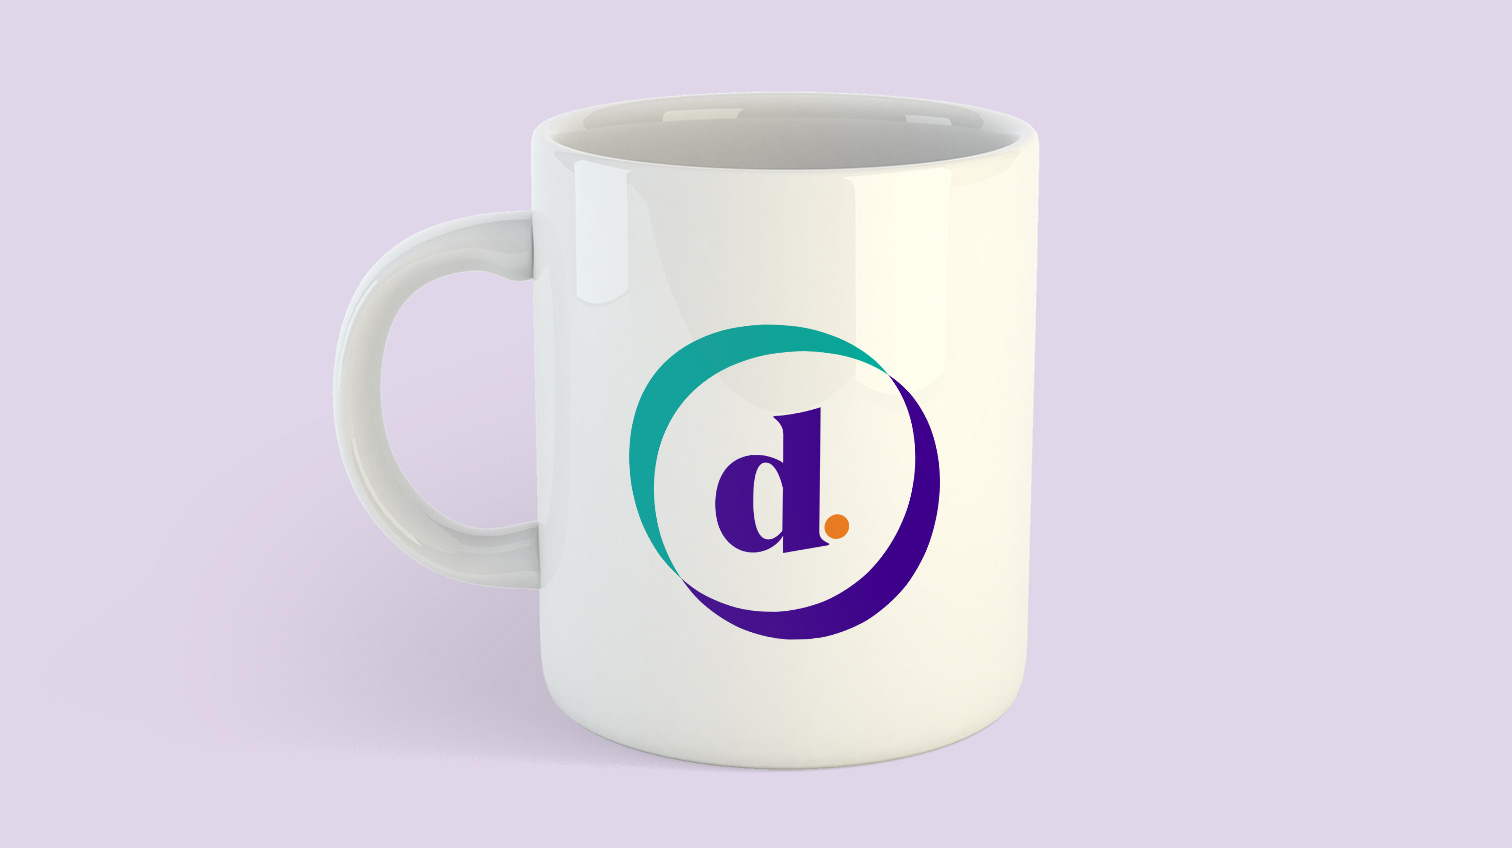 Danory logo printed on a mug - White Canvas Design